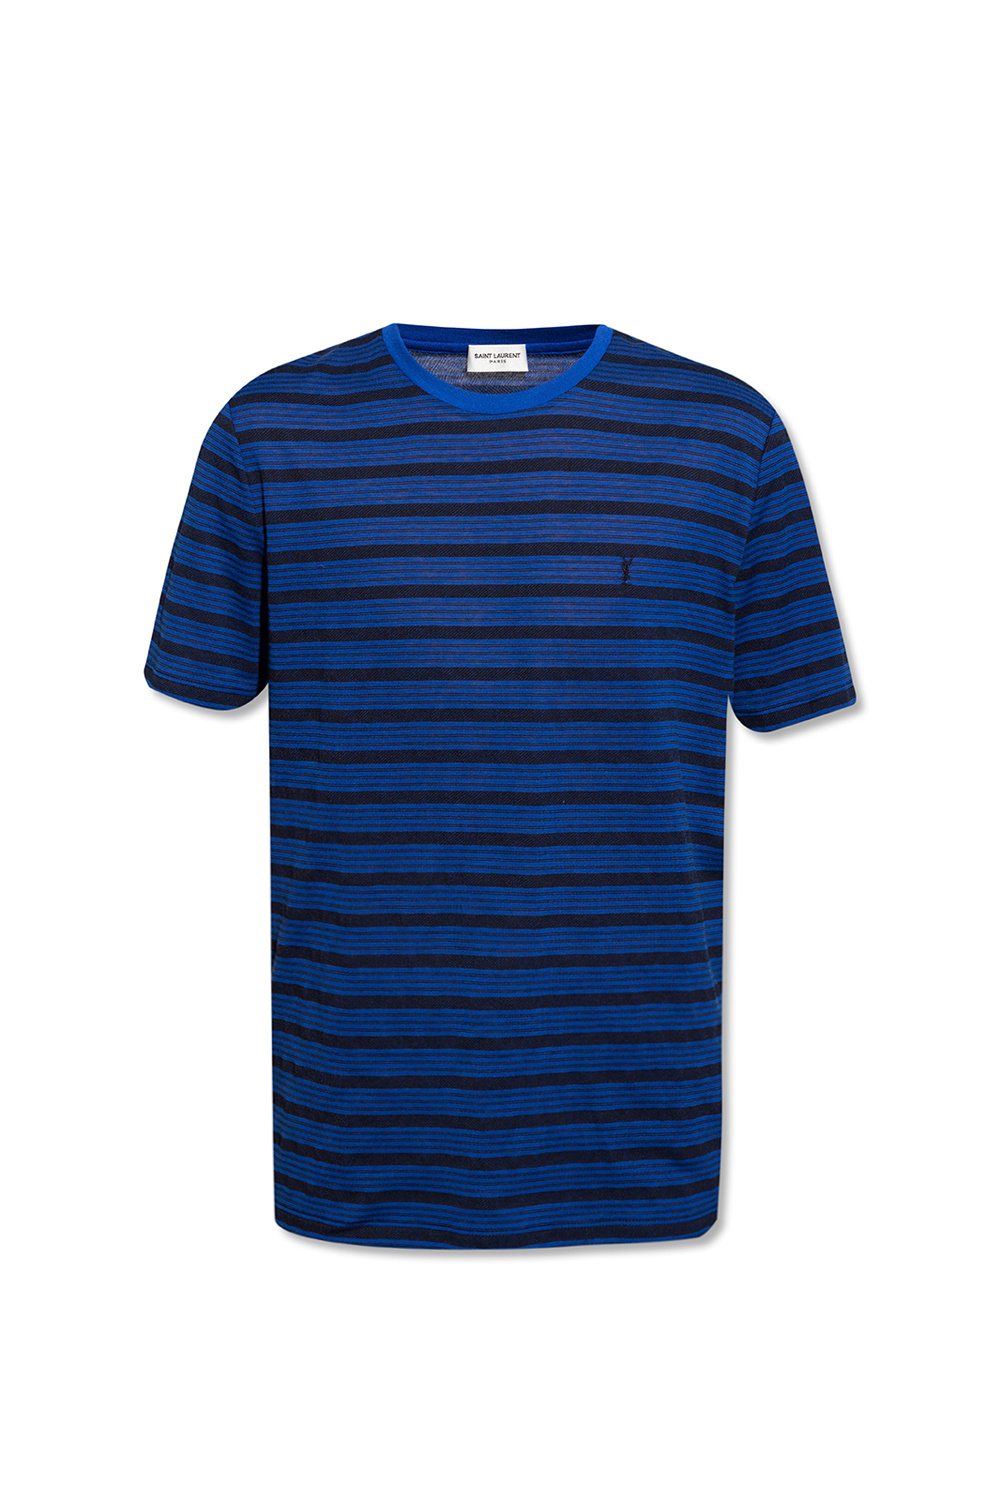 Saint Laurent Striped Tshirt in Blue for Men